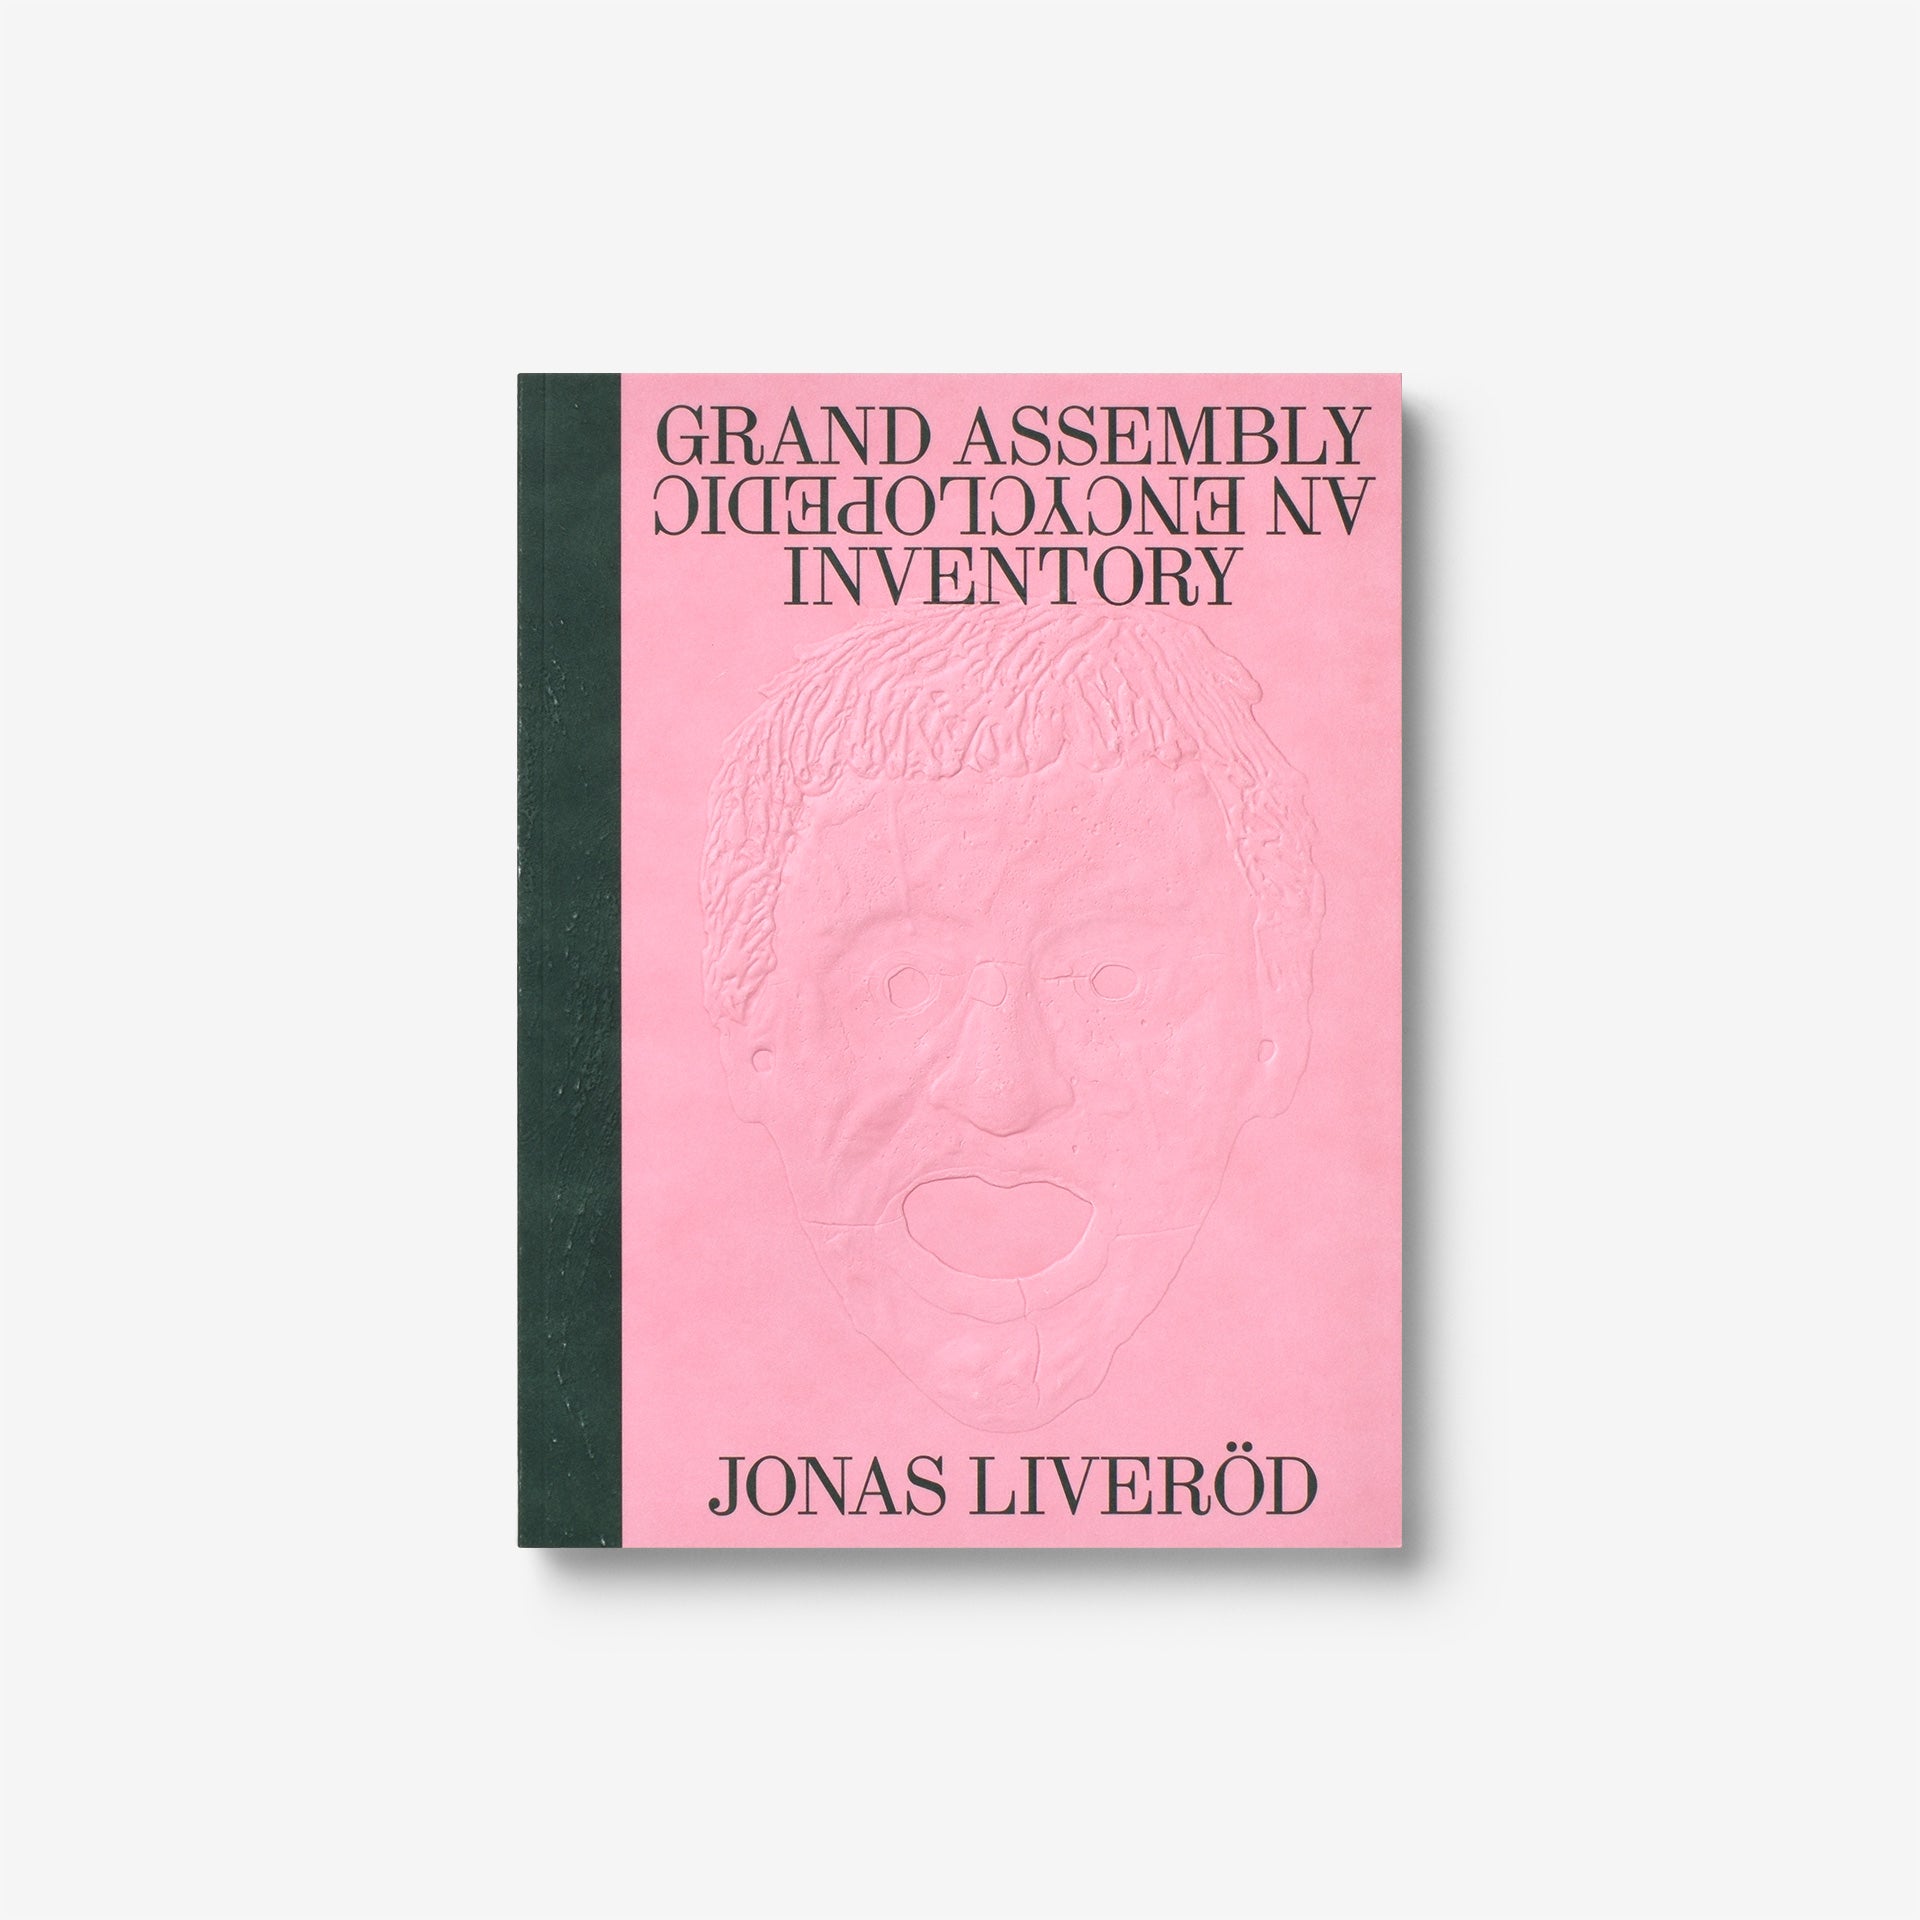 Grand Assembly – An Encyclopedic Inventory by Jonas Liveröd